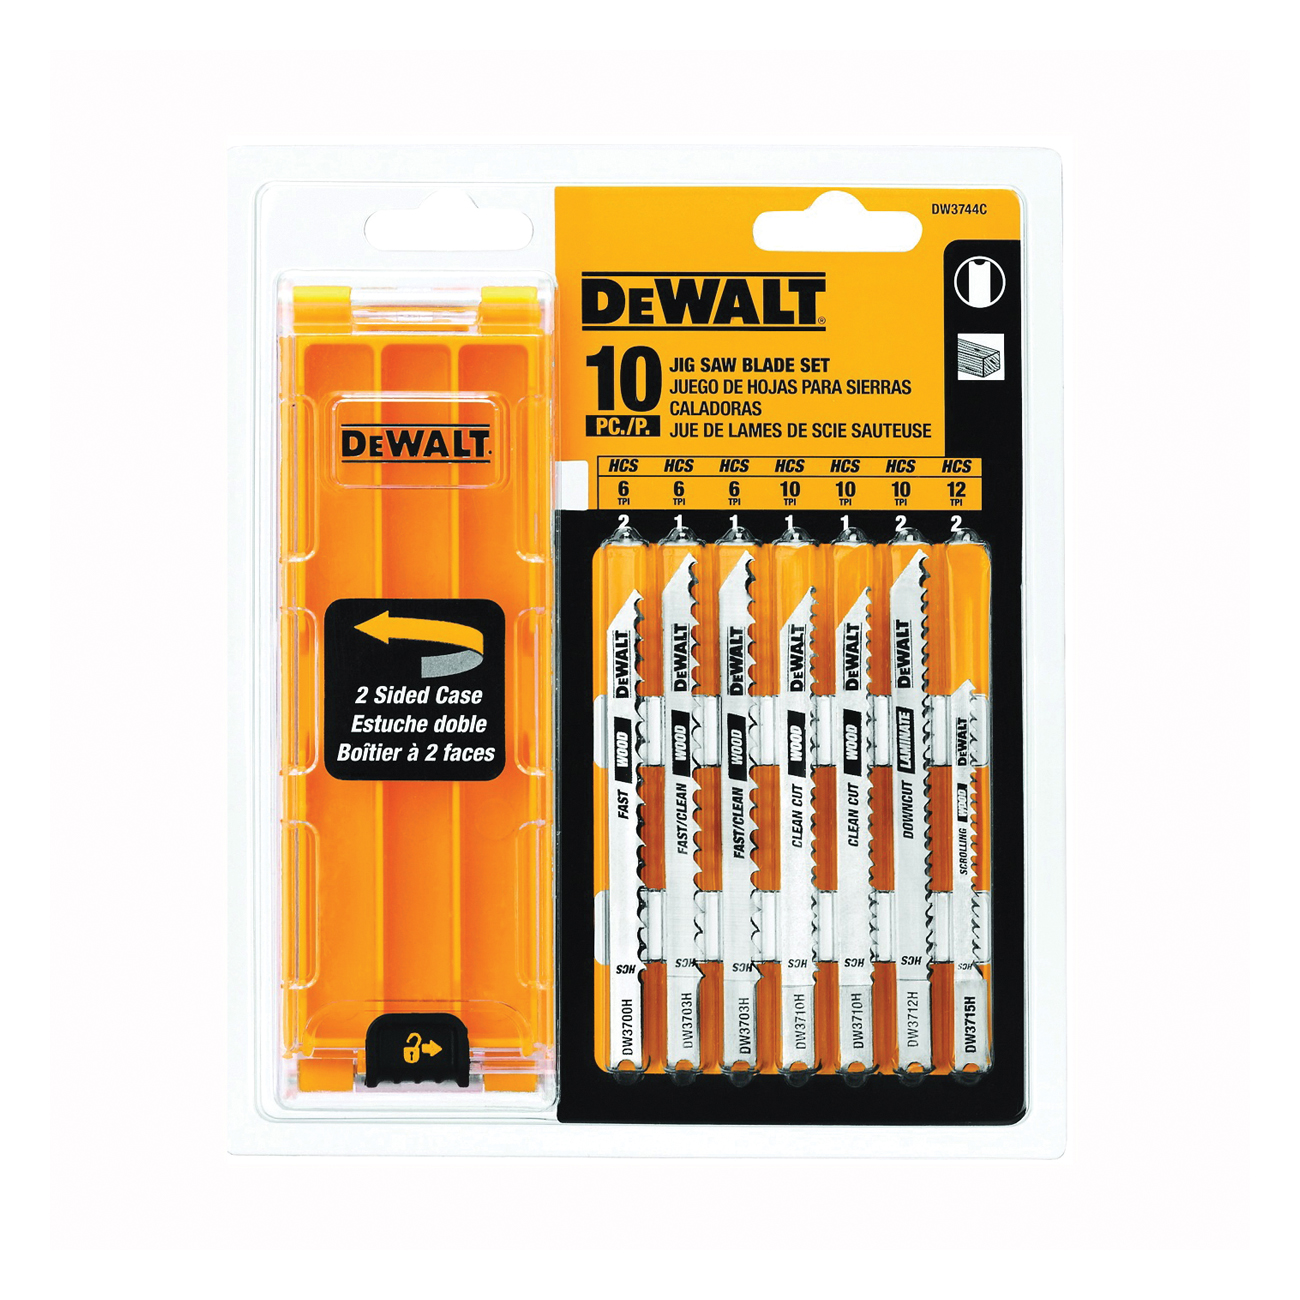 DeWALT DW3744C Jig Saw Blade Kit, 10-Piece, HCS